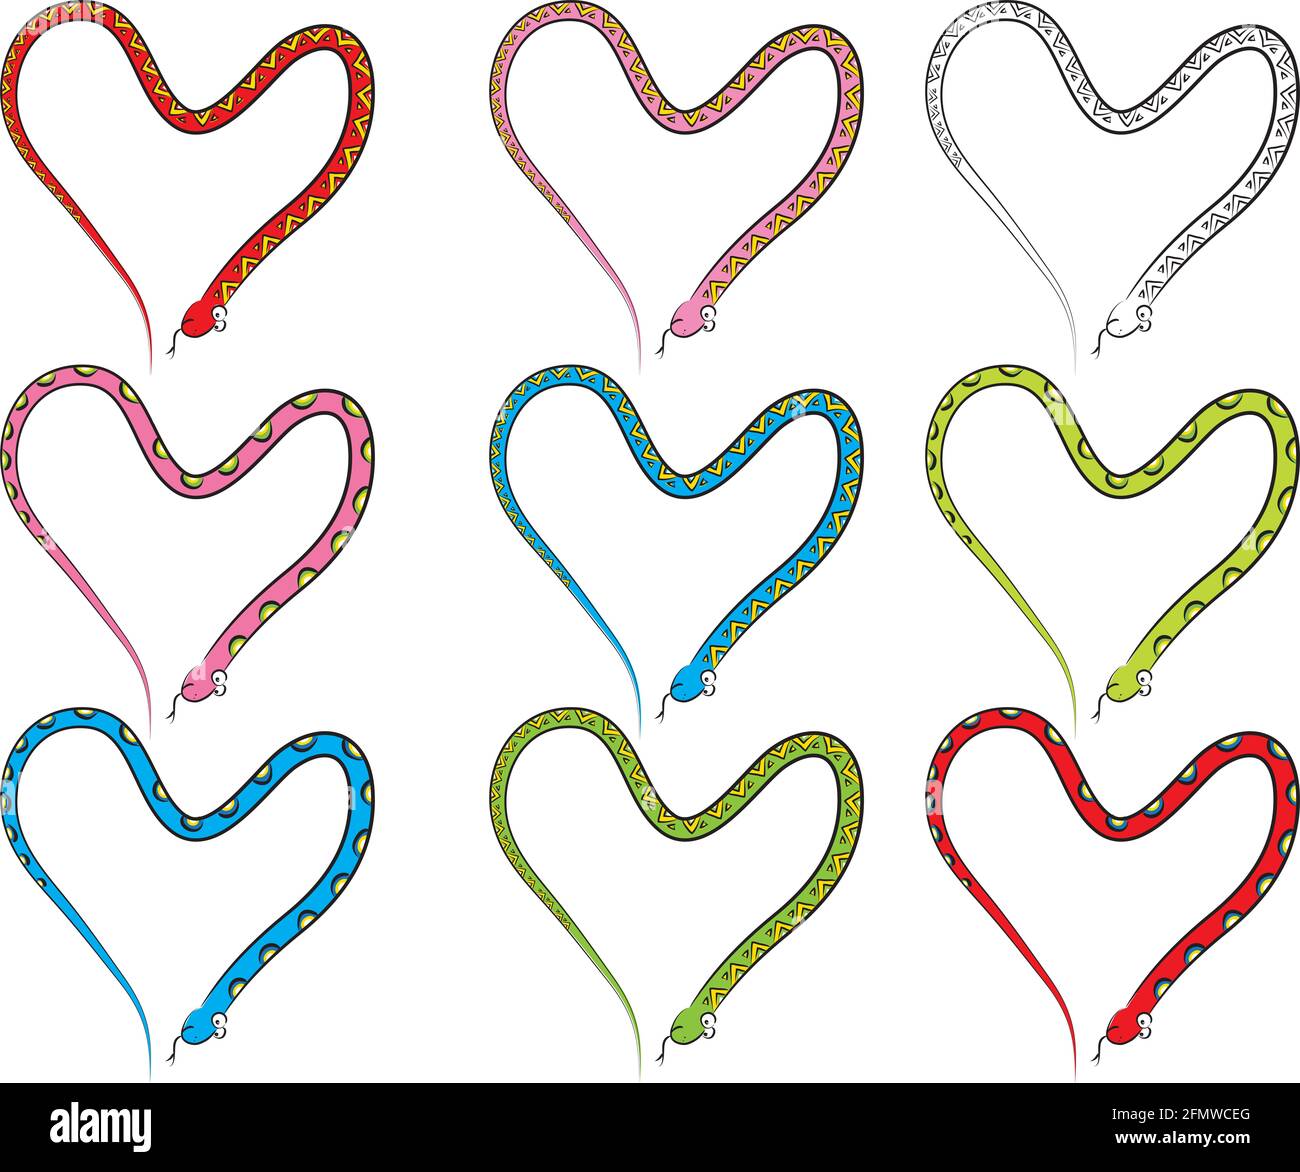 heart shape design icon logo set cartoon long snake Stock Photo